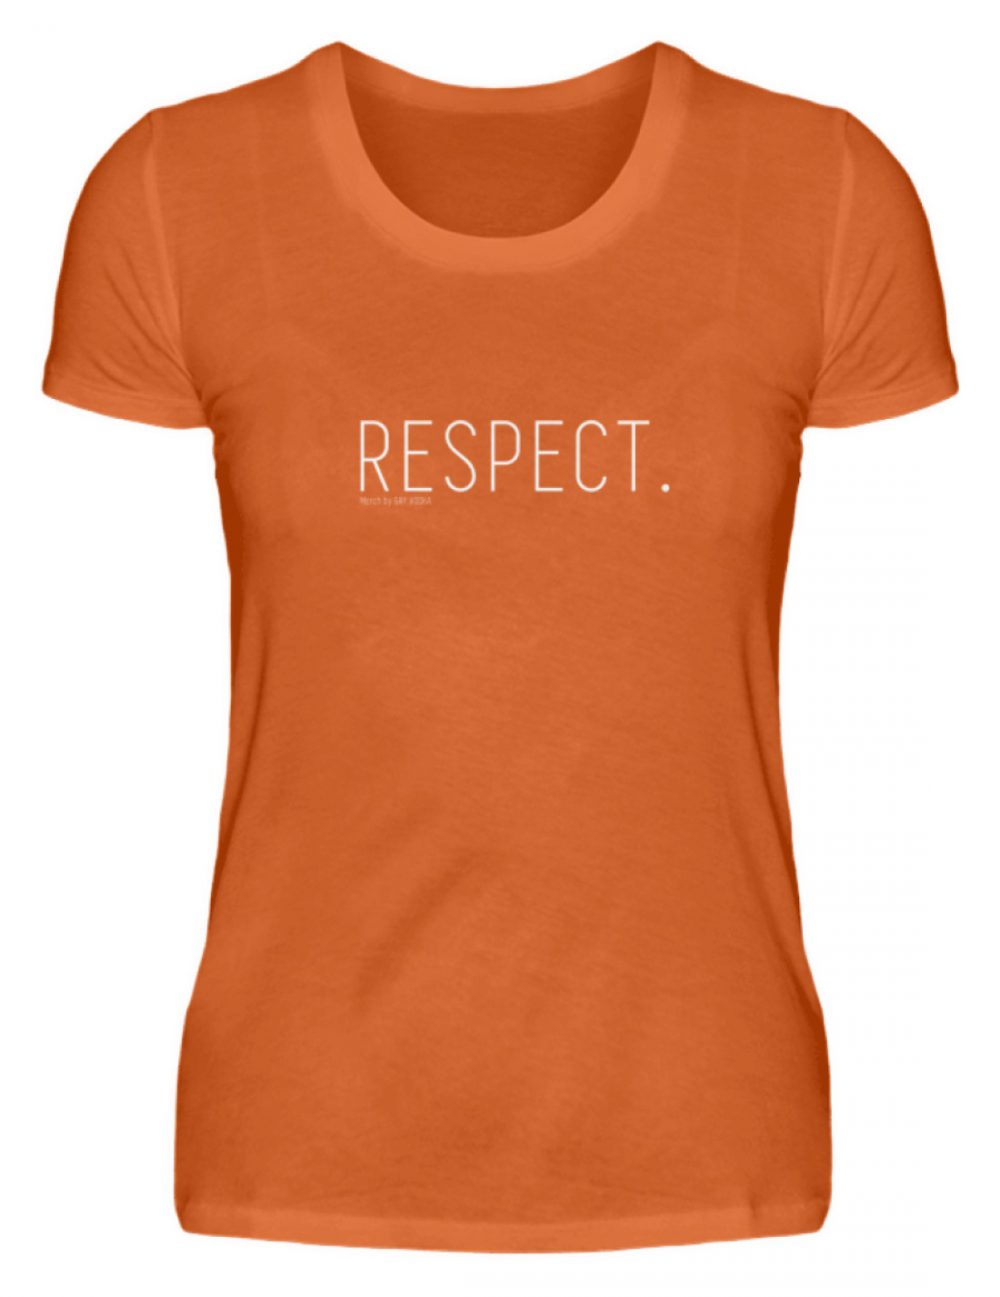 RESPECT. - Damen Premiumshirt-2953